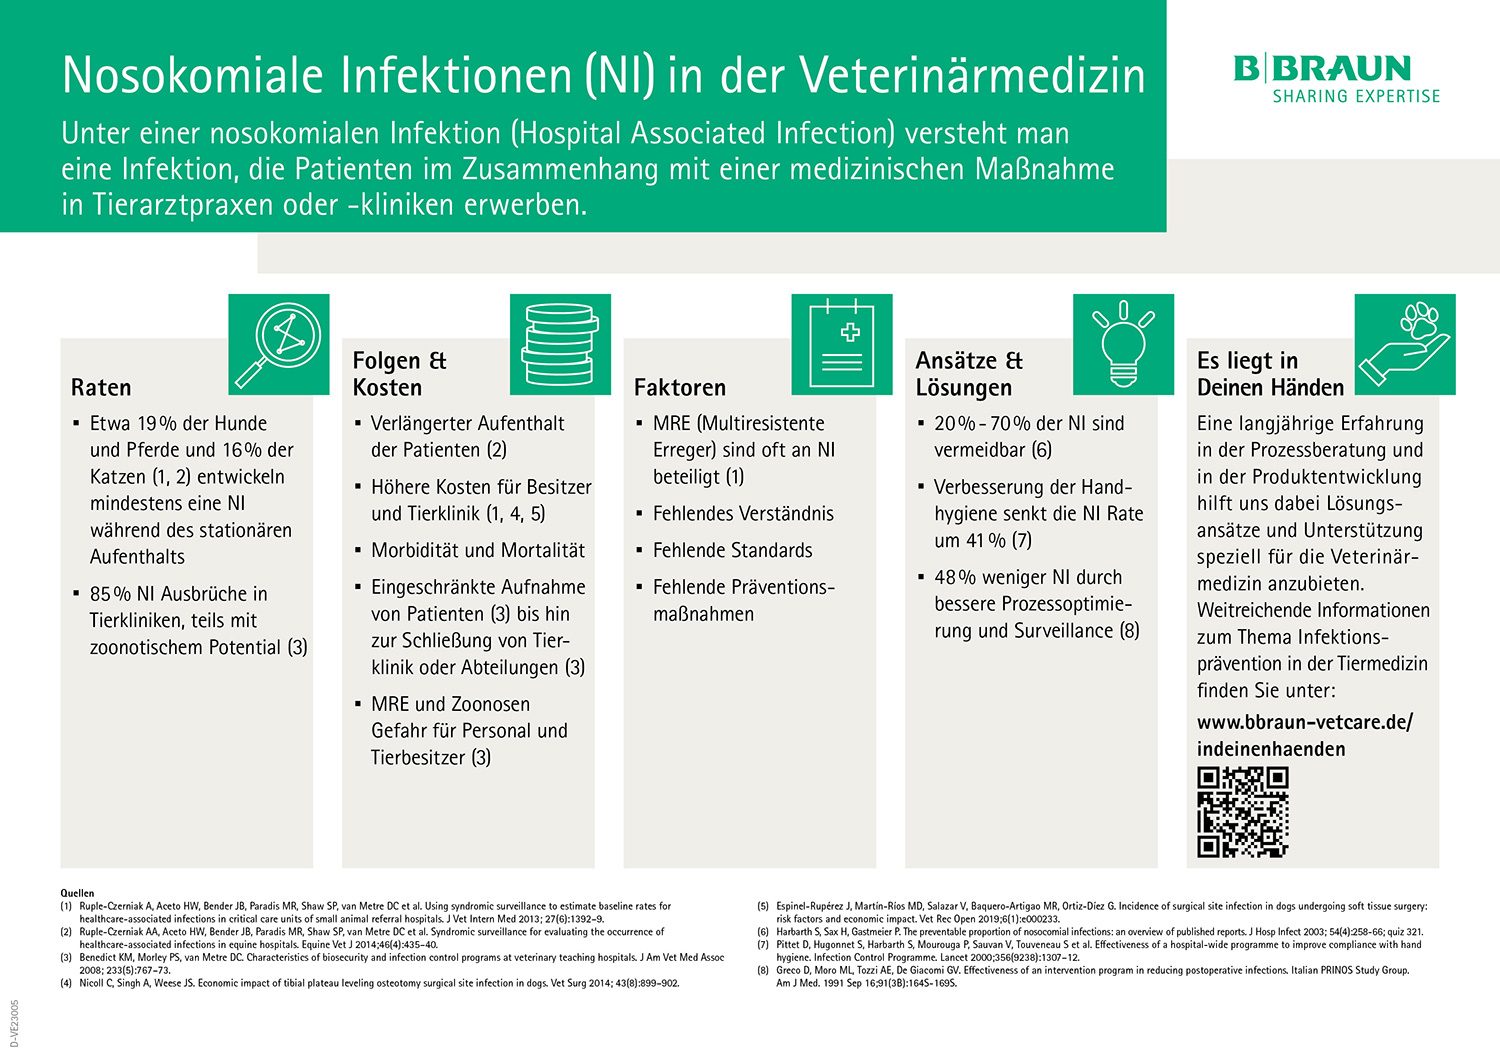 Factsheet: Nosokomiale Infektionen (NI) in der Veterinärmedizin